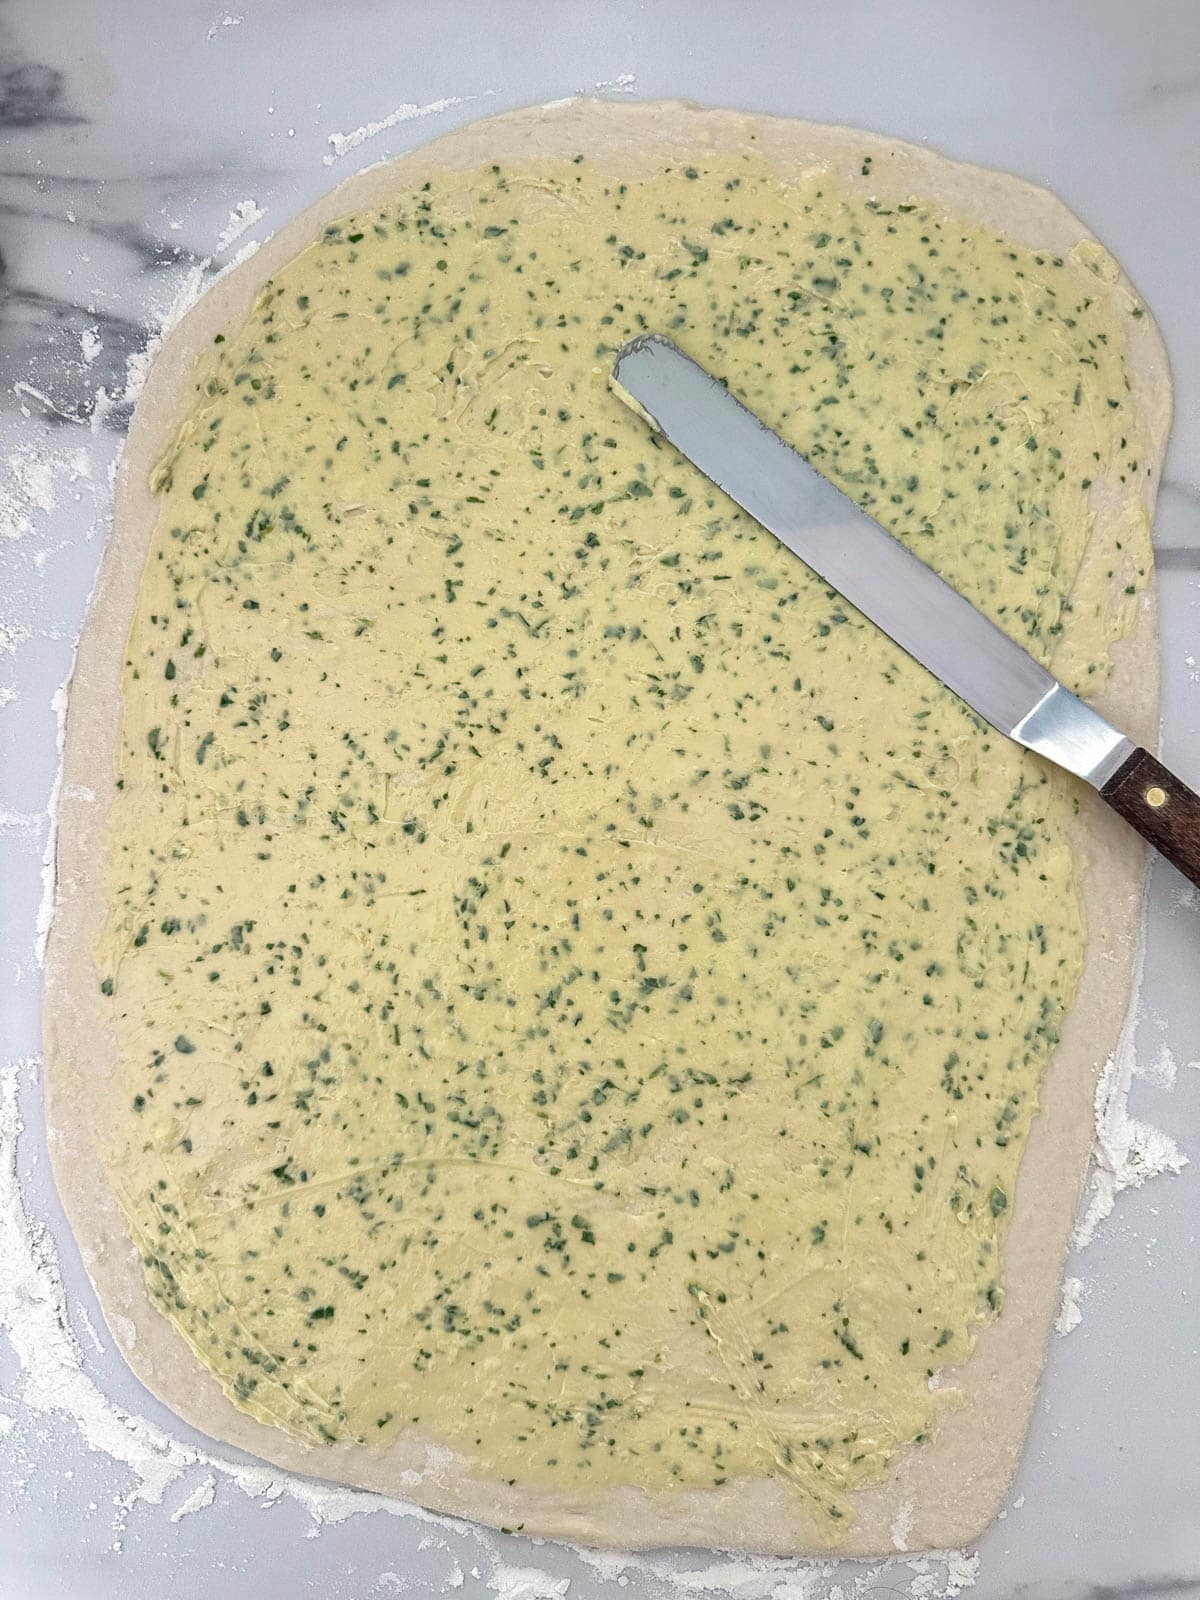 Knife spreading garlic butter over bread dough. 